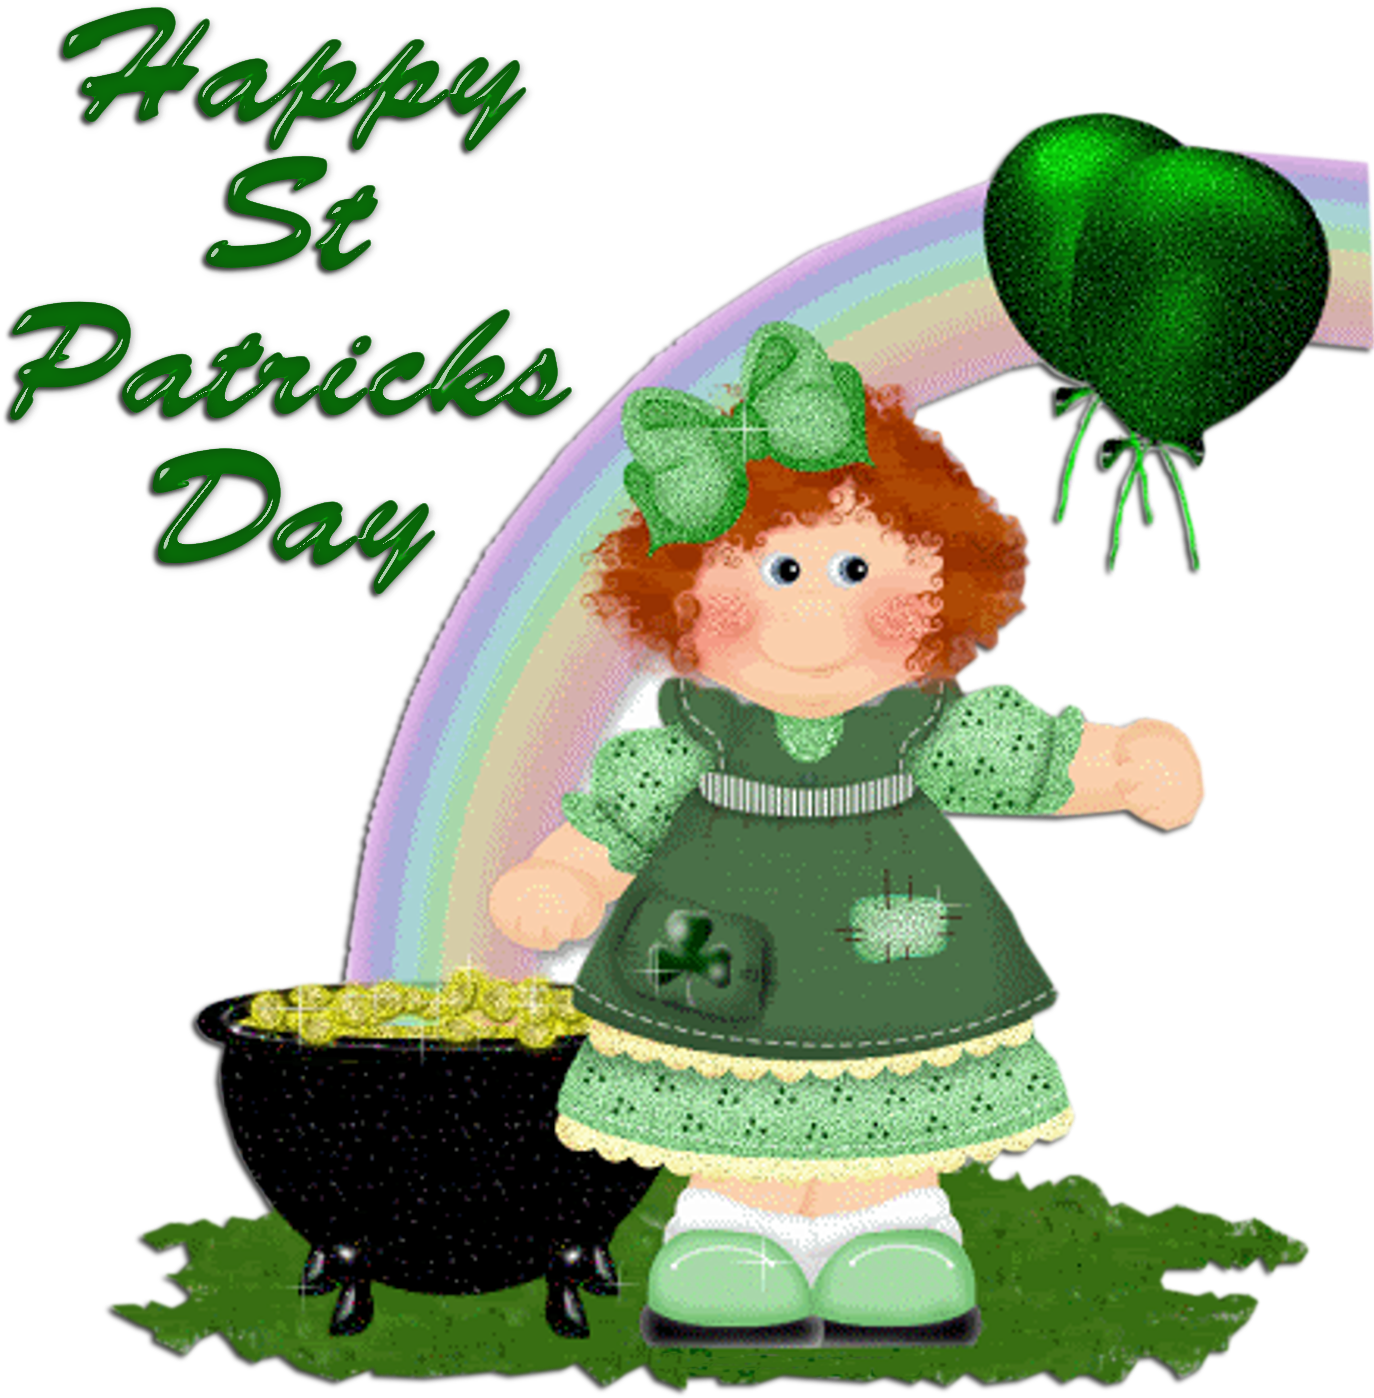 Happy St Patricks Day - Happy St Patrick's Day Gif (1420x1420)